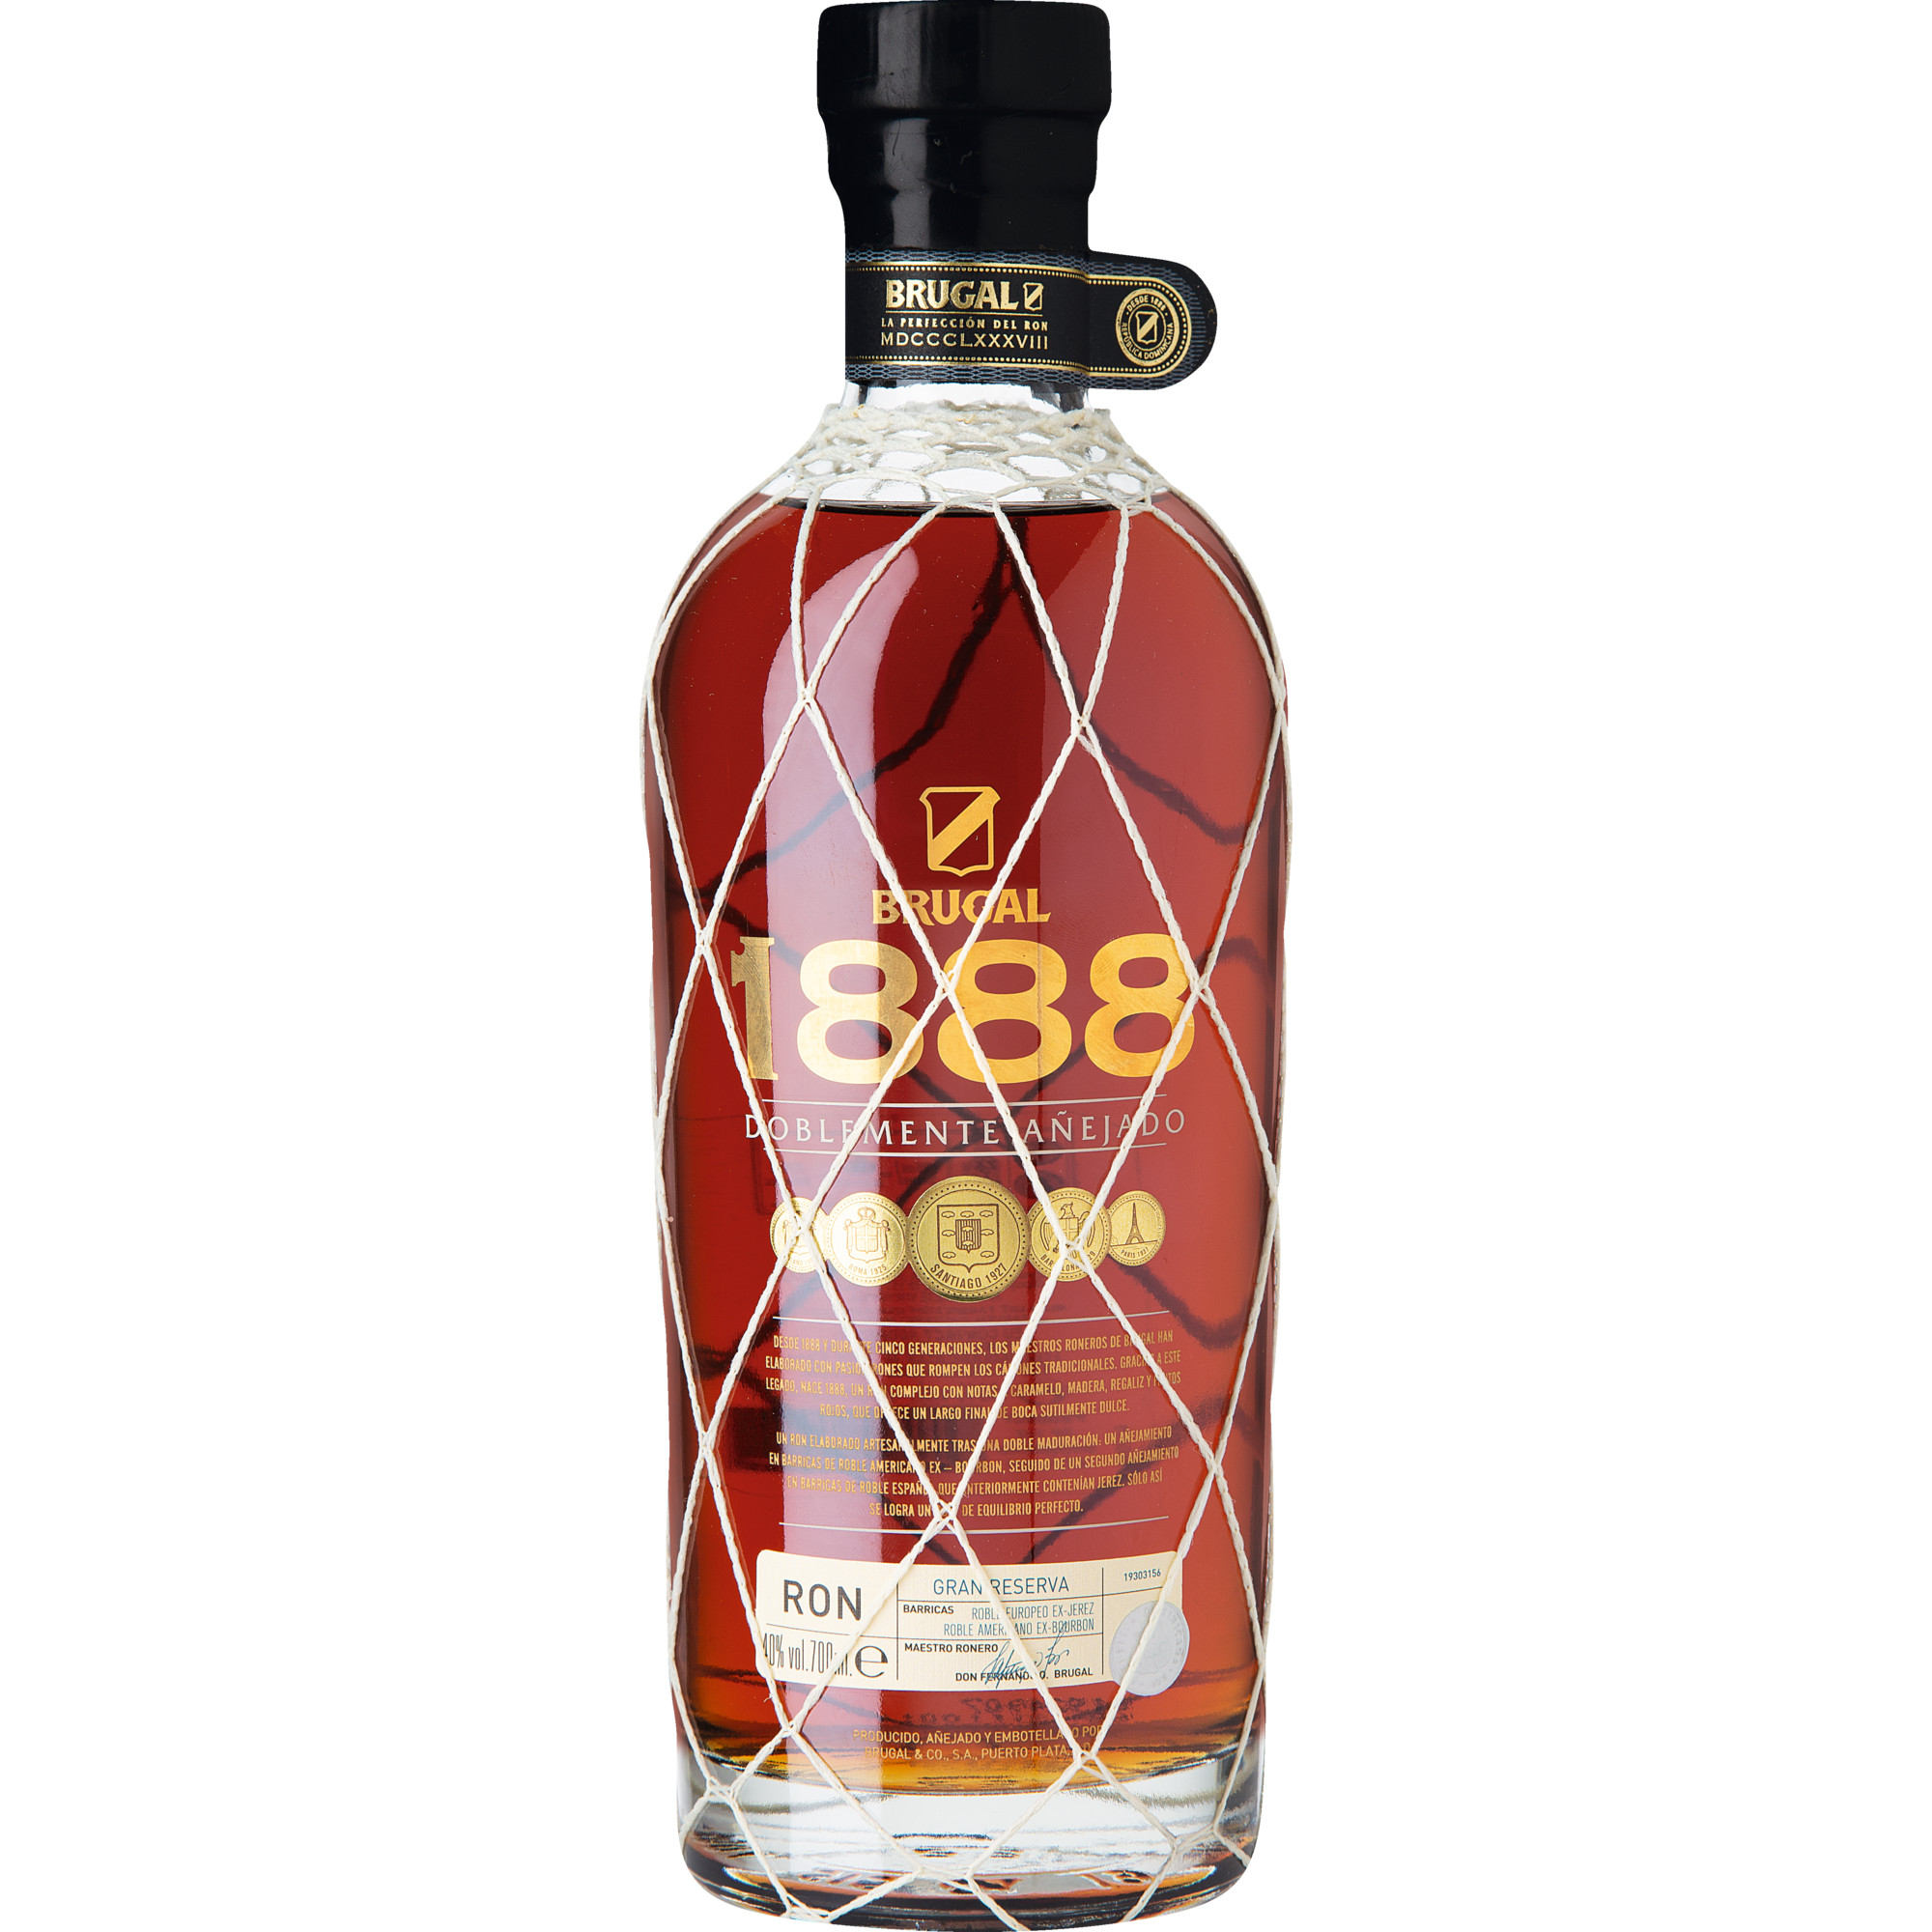 Brugal Ron 1888 Gran Reserva Familiar, Dominikanischer Rum, 0,7 L, 40% Vol., Spirituosen  Spirituosen Hawesko